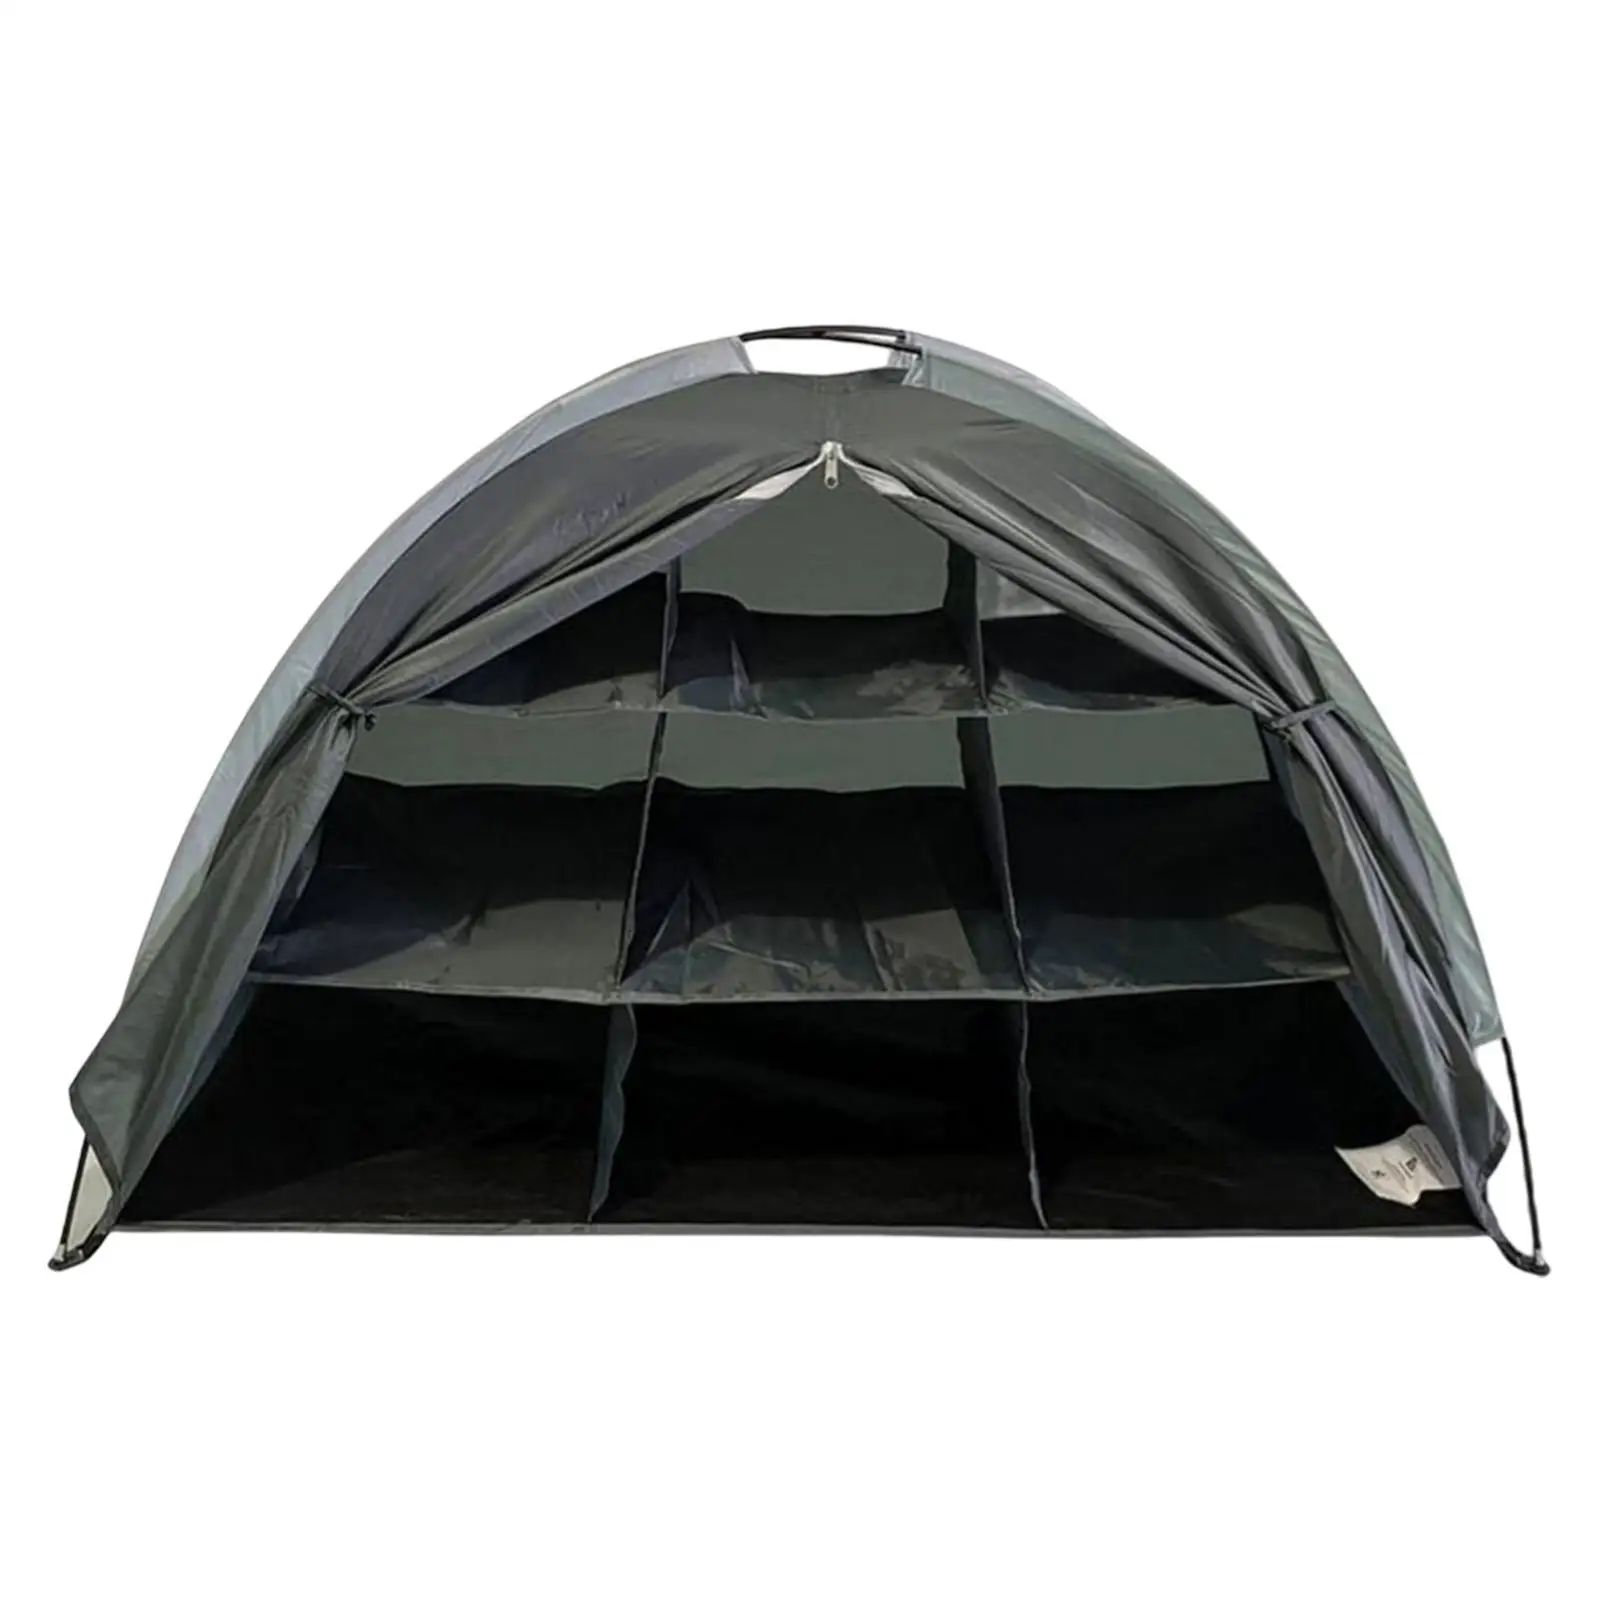 Camping Shoes Storage Organizer RV Tent Organizer 9 Shelf Foldable Durable